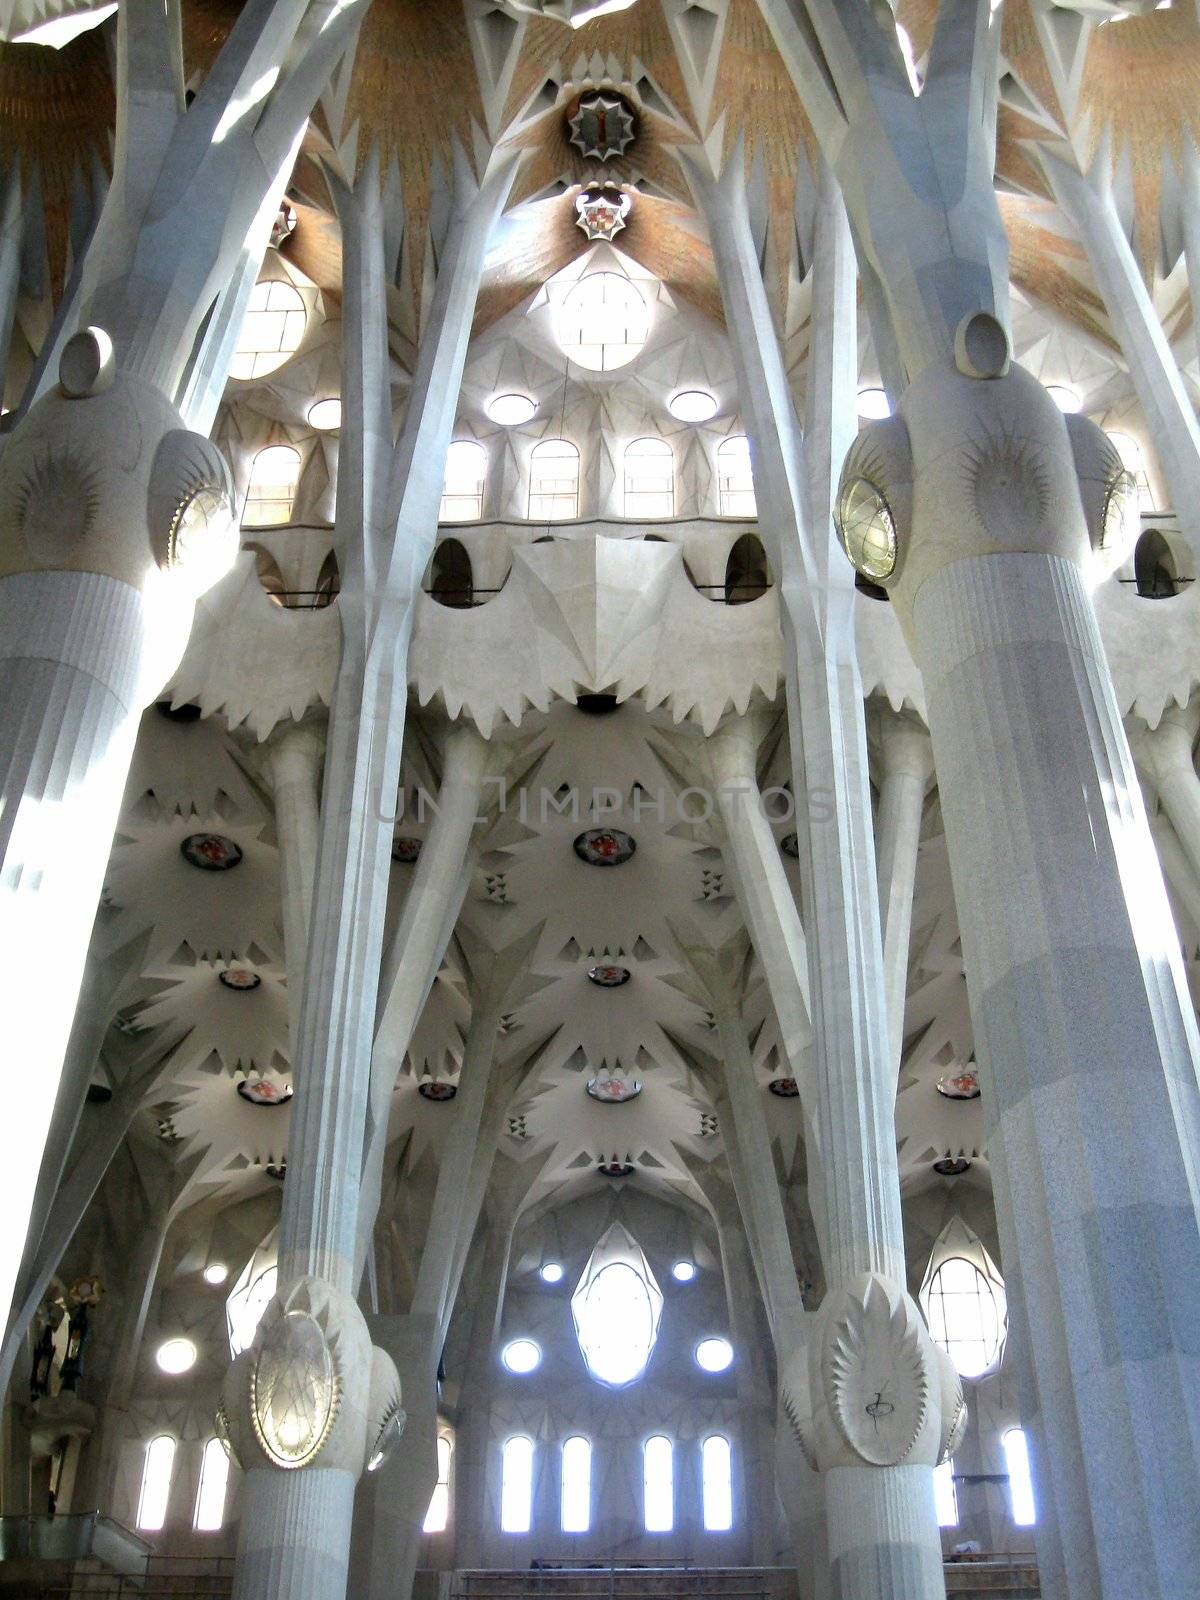 View inside the Sagrada Familia church in Madrid